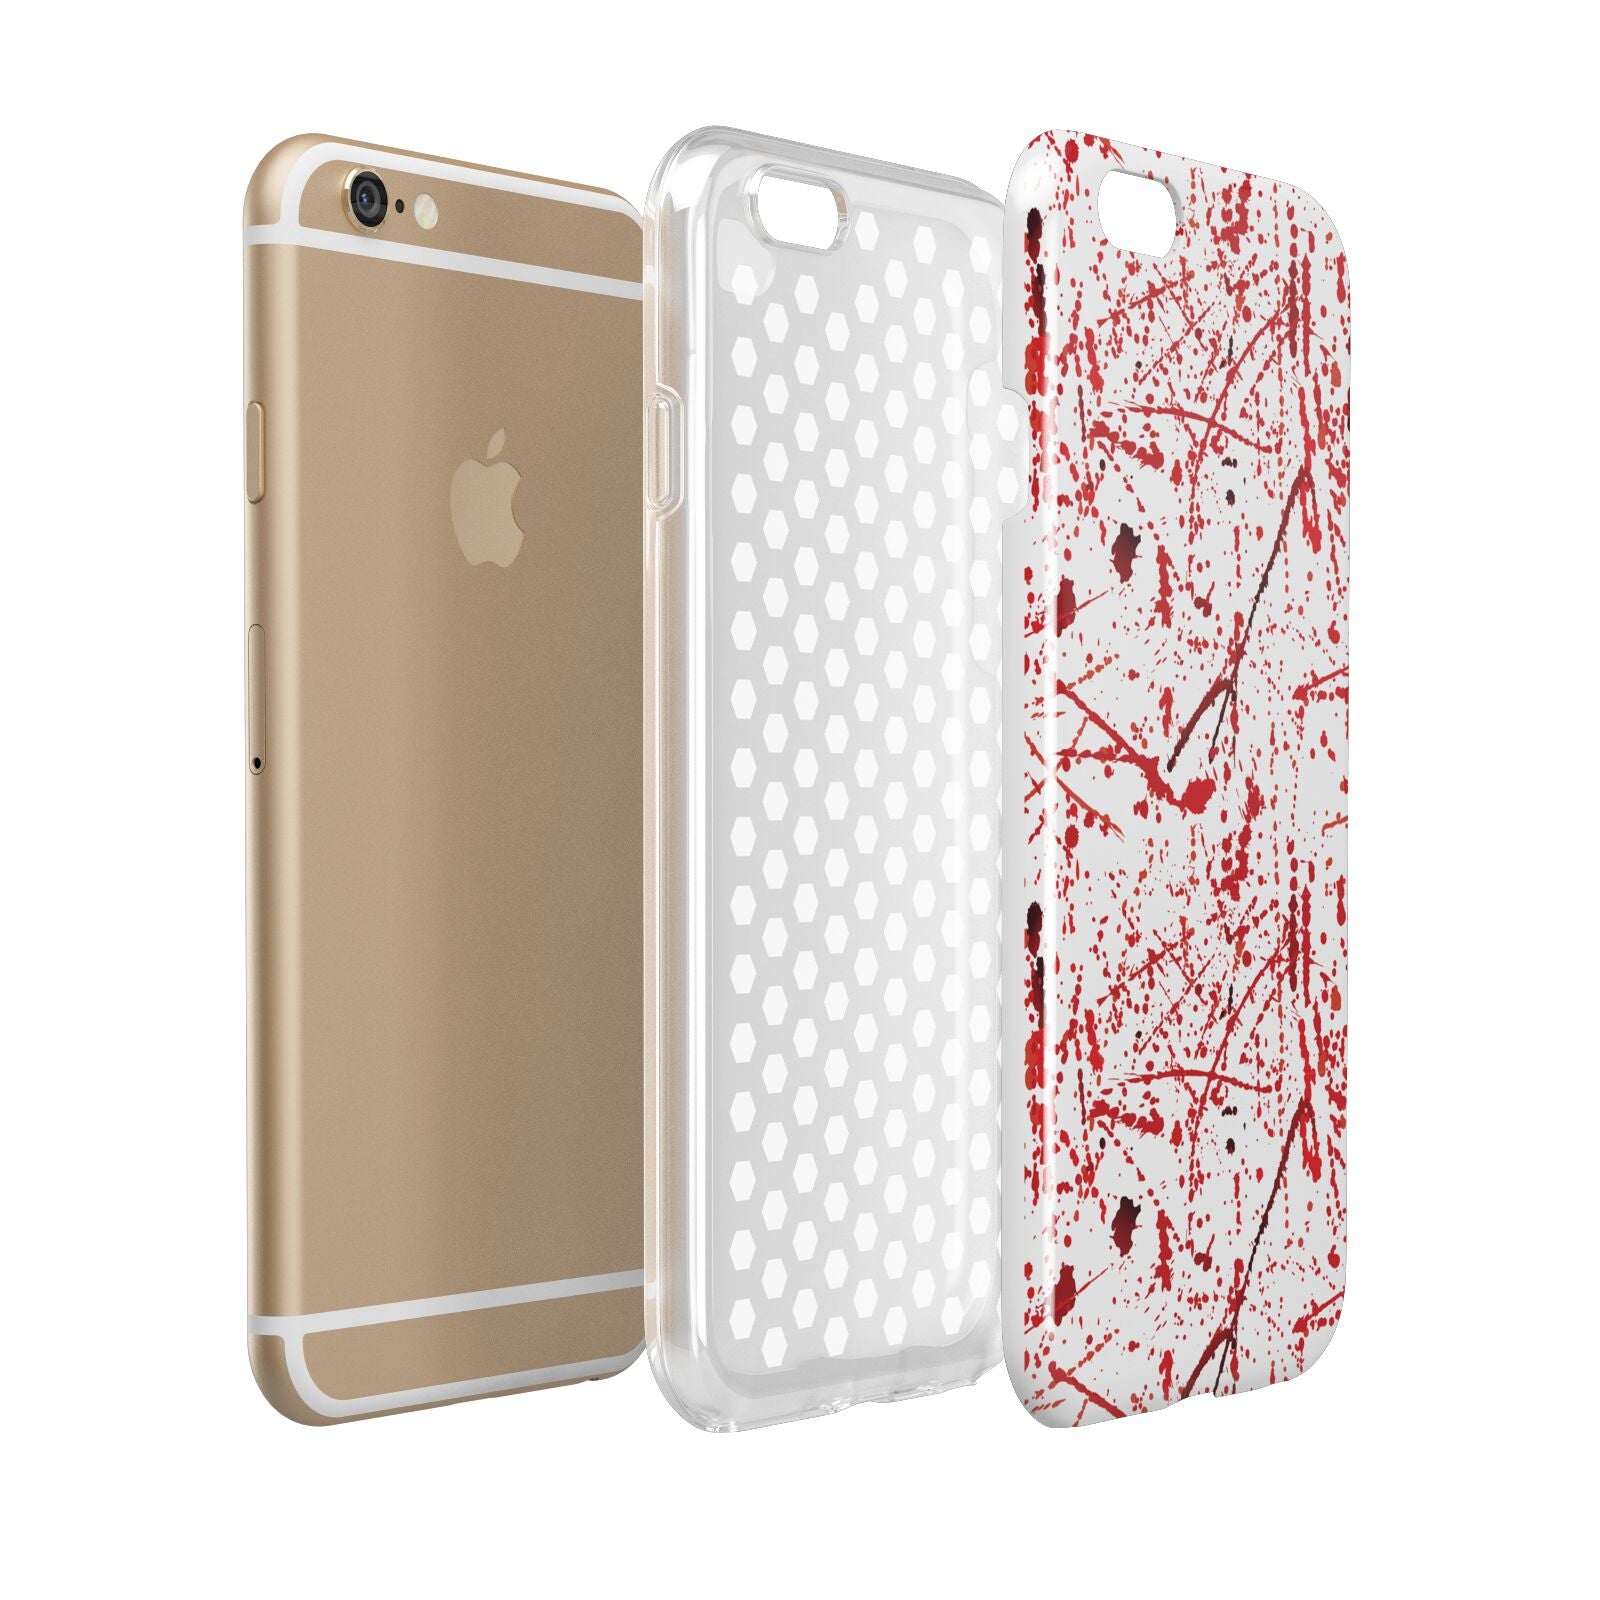 Blood Splatter Apple iPhone 6 3D Tough Case Expanded view